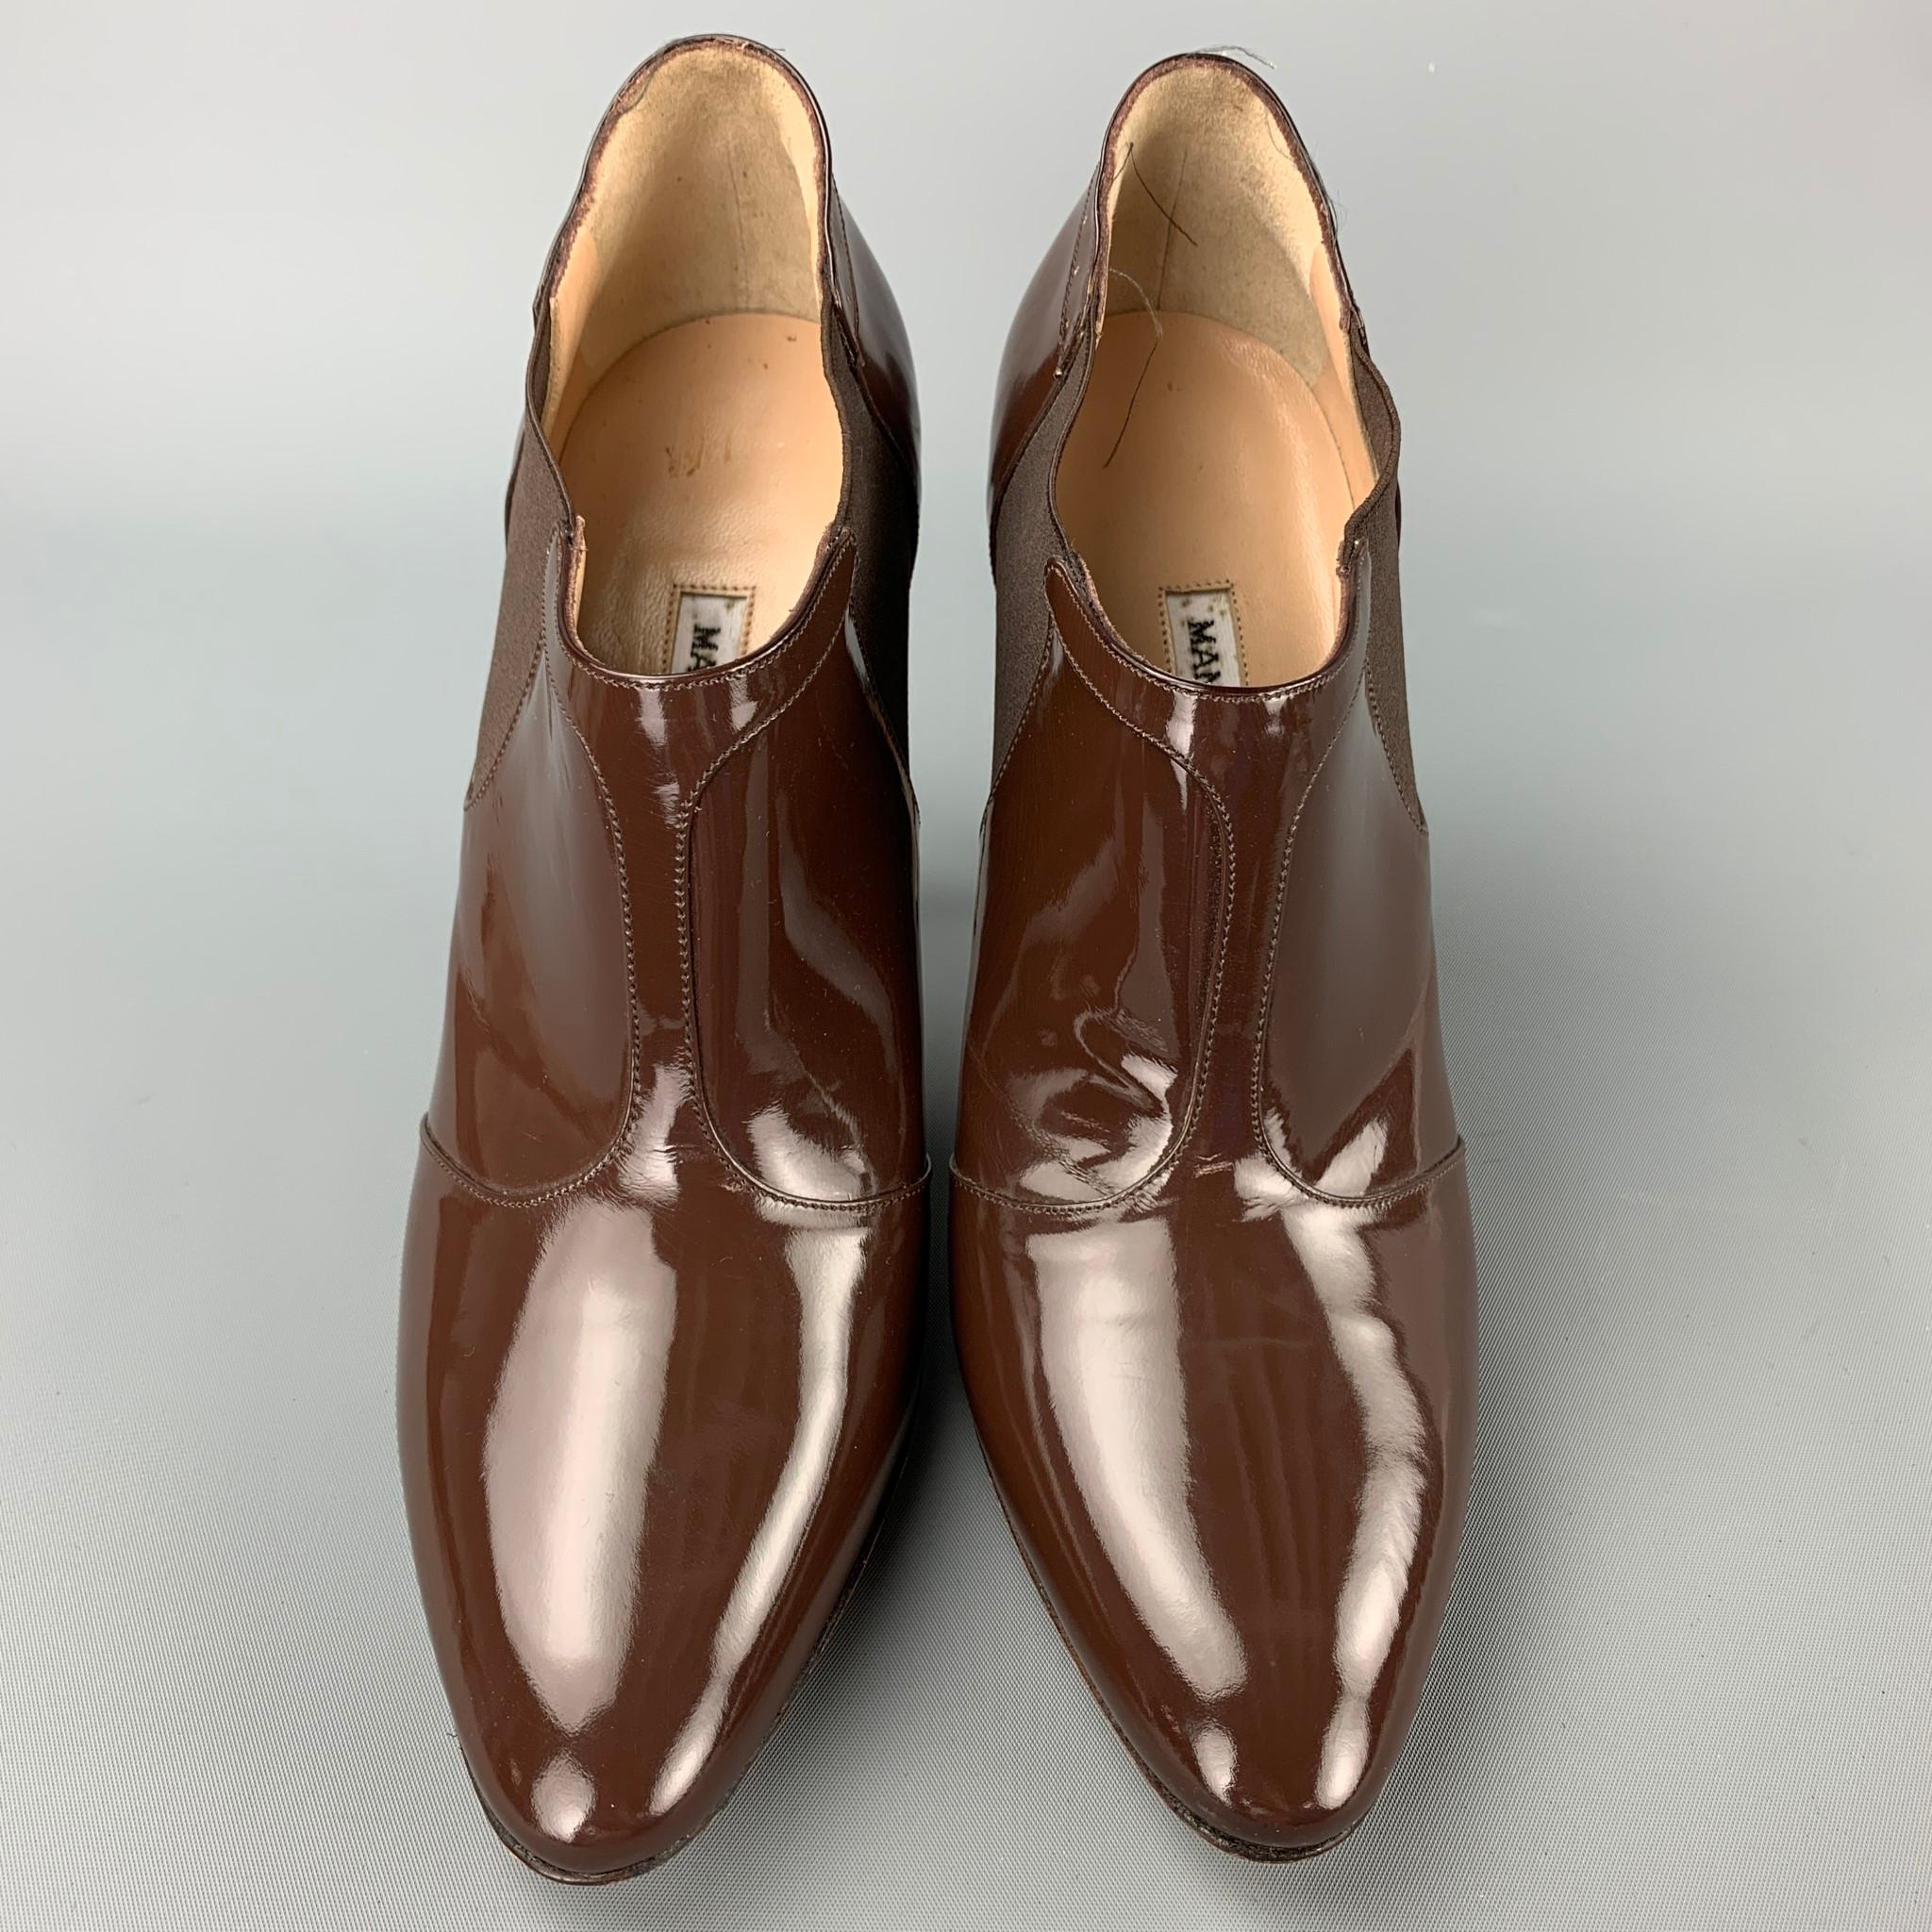 Black MANOLO BLAHNIK Size 8.5 Brown Patent Leather Booties